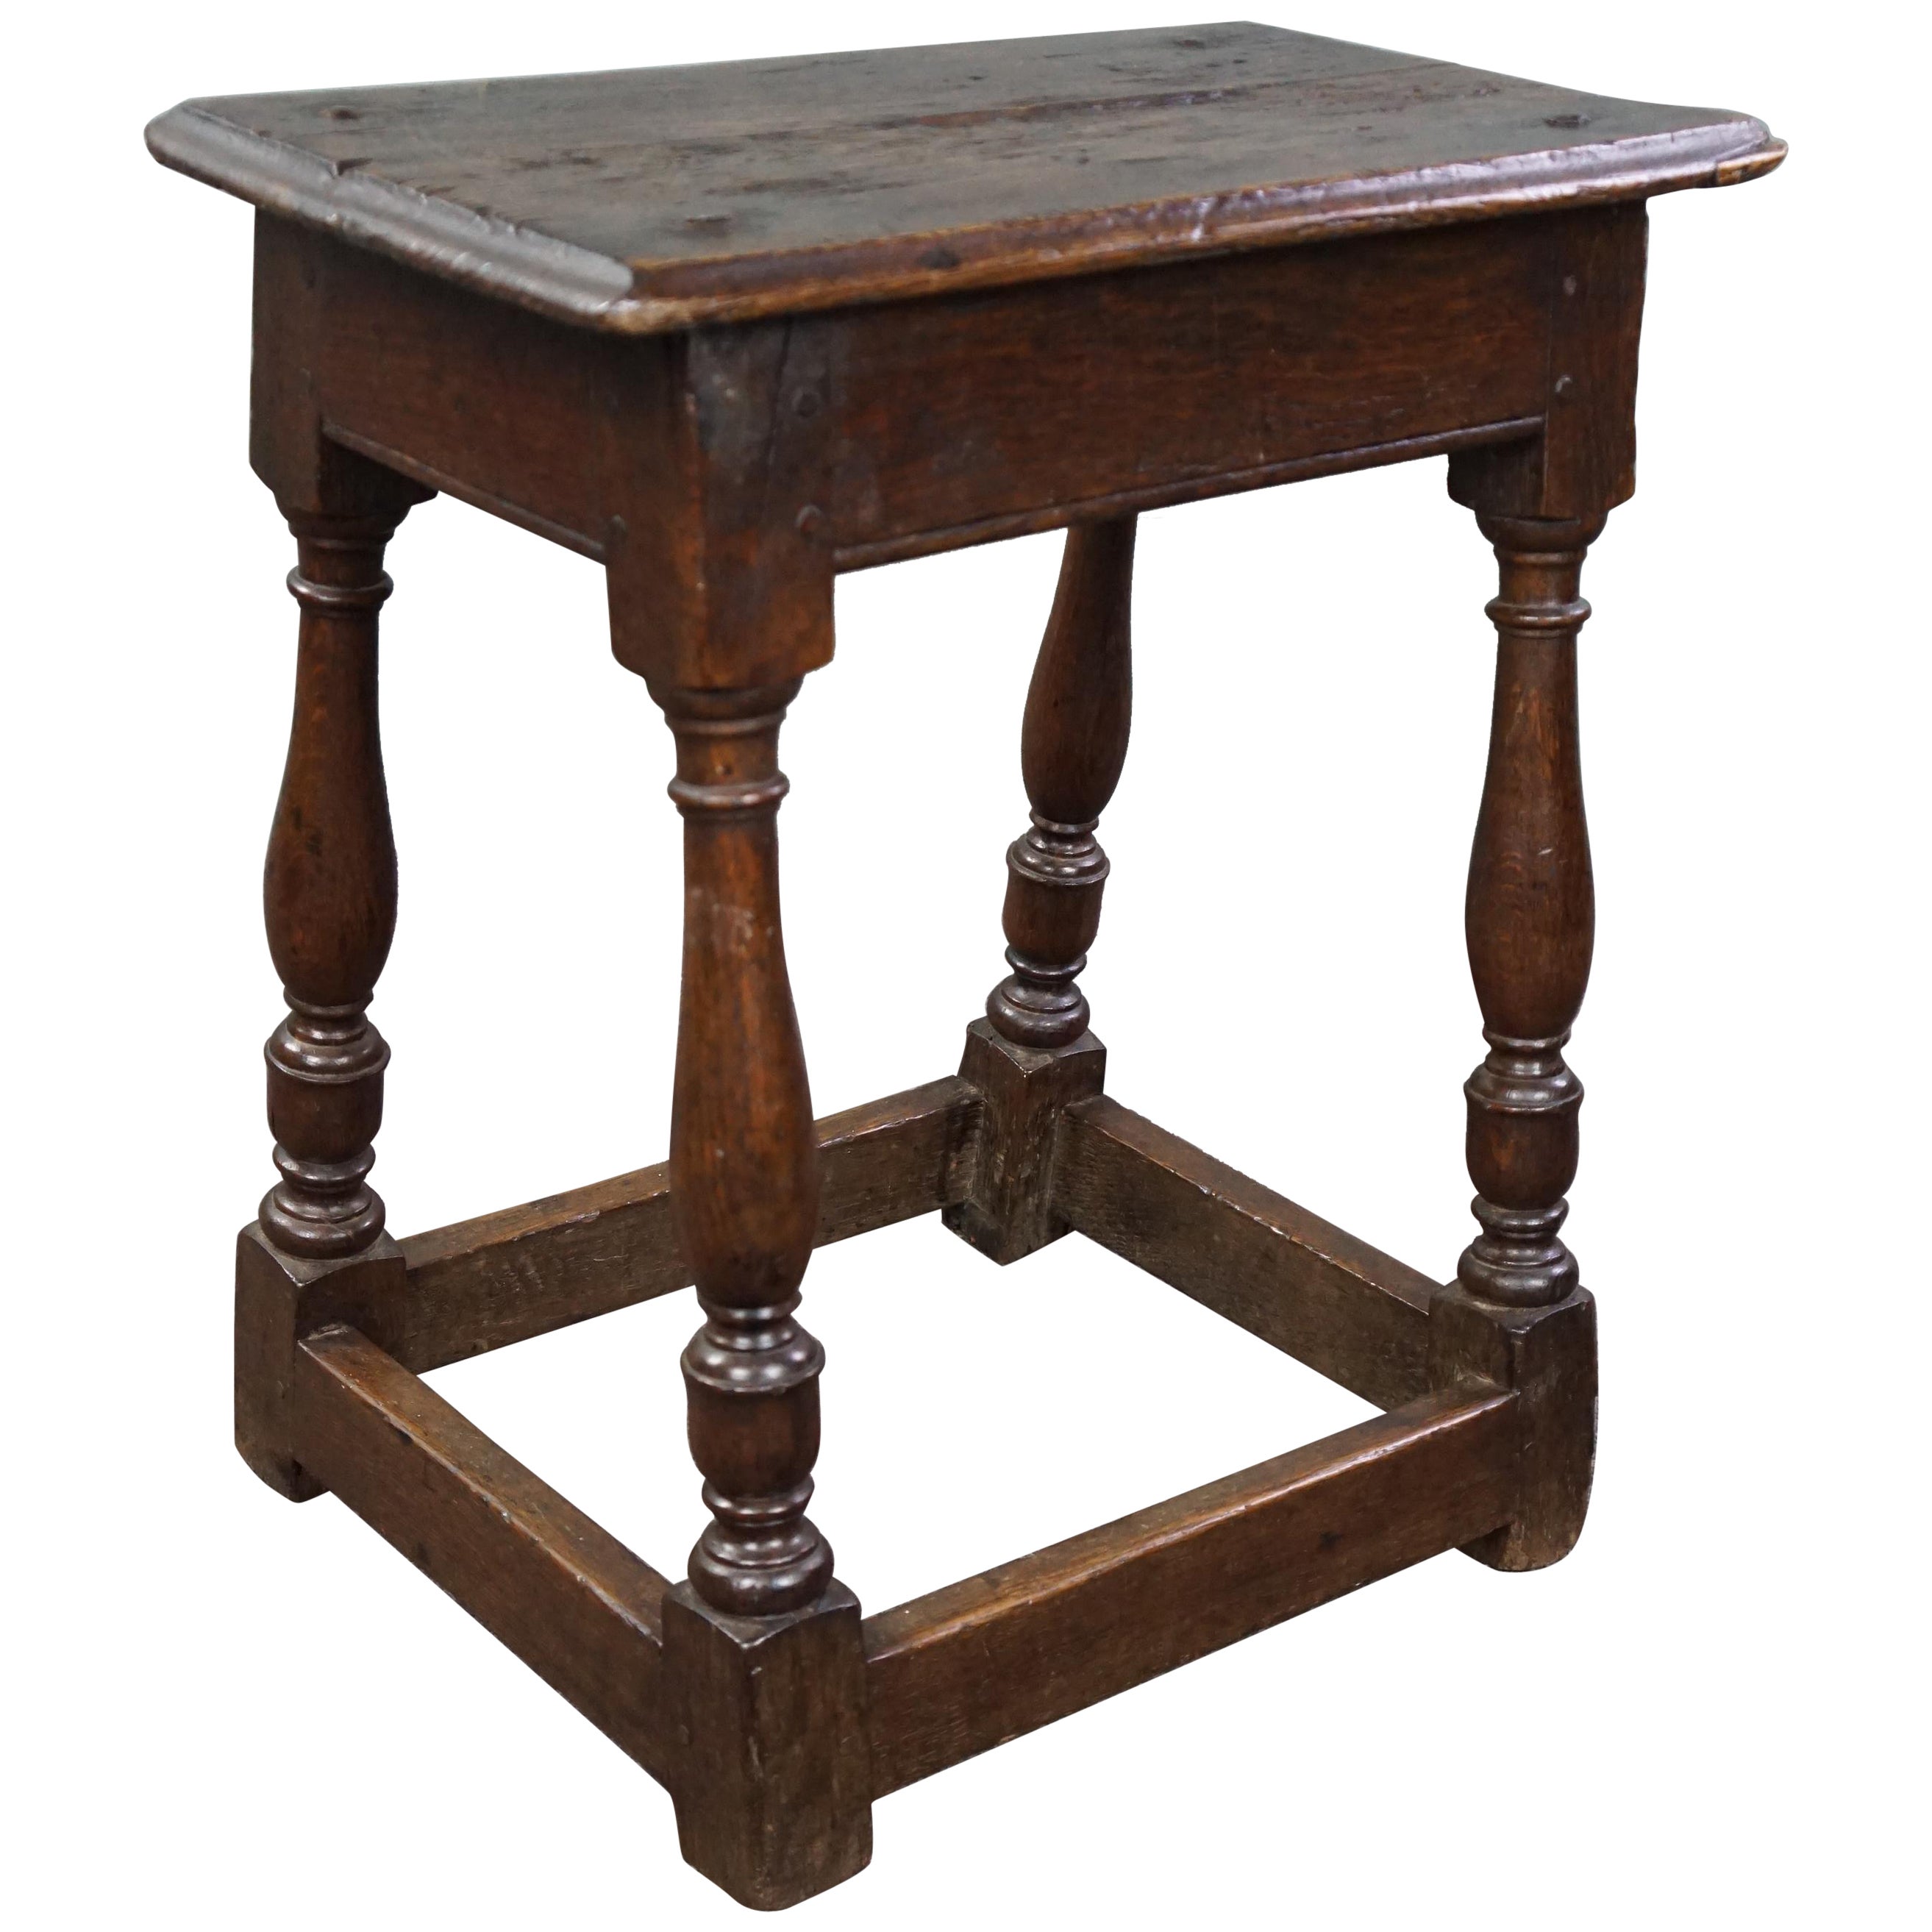 Very beautiful and original 16th-century English oak joint stool